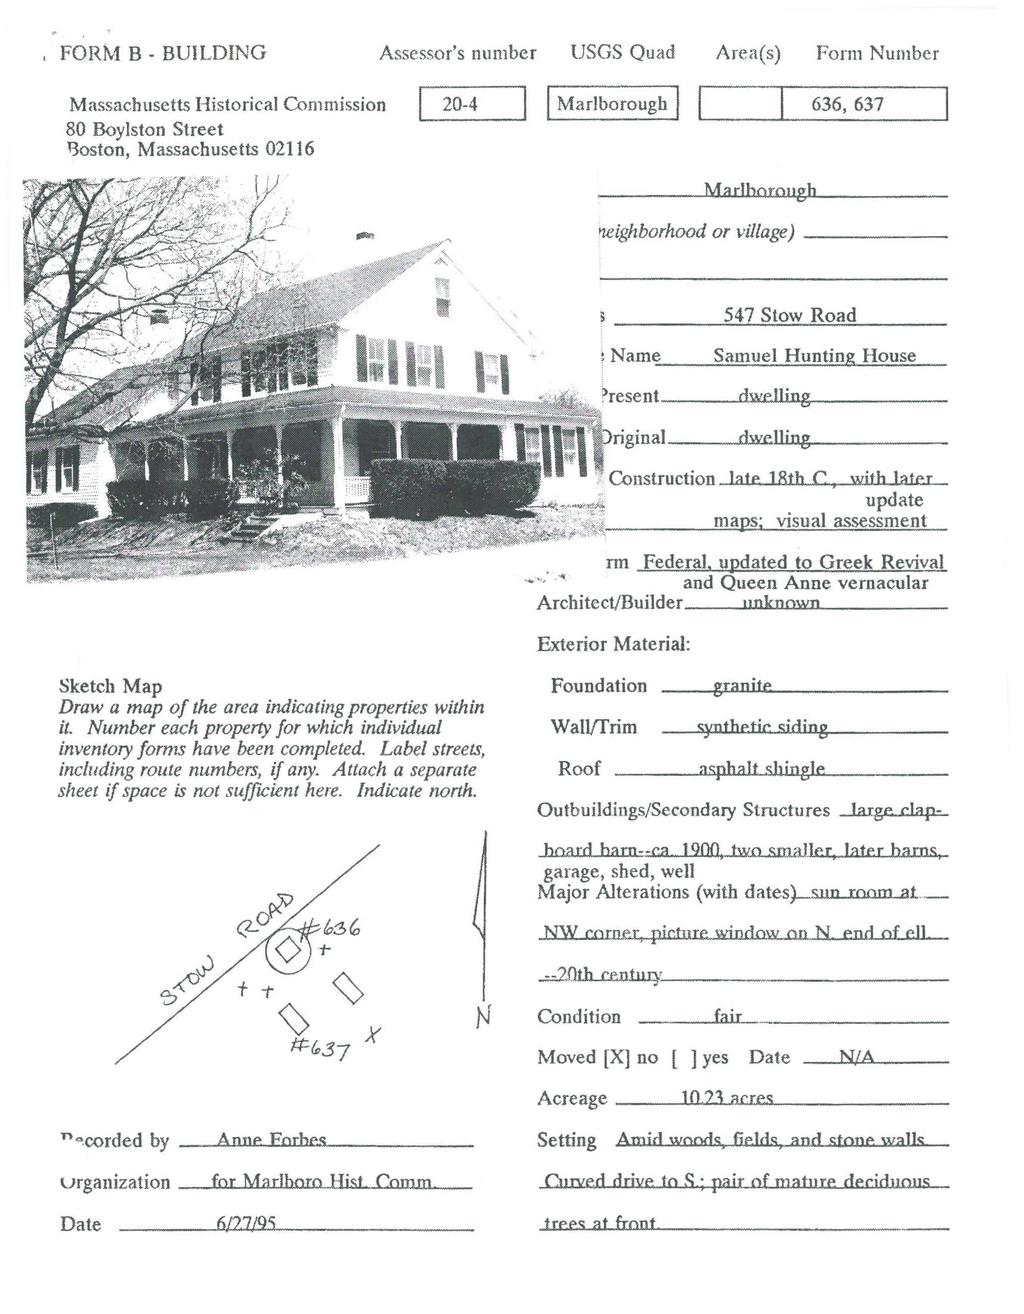 I FORM B - BUILDING Assessor's number USGS Quad Areats) Form Number Massachusetts Historical Commission I 20-4 80 Boylston Street Boston, Massachusetts 02116 1 (Marlborough I ~ 636, 637 Ma rlborougb